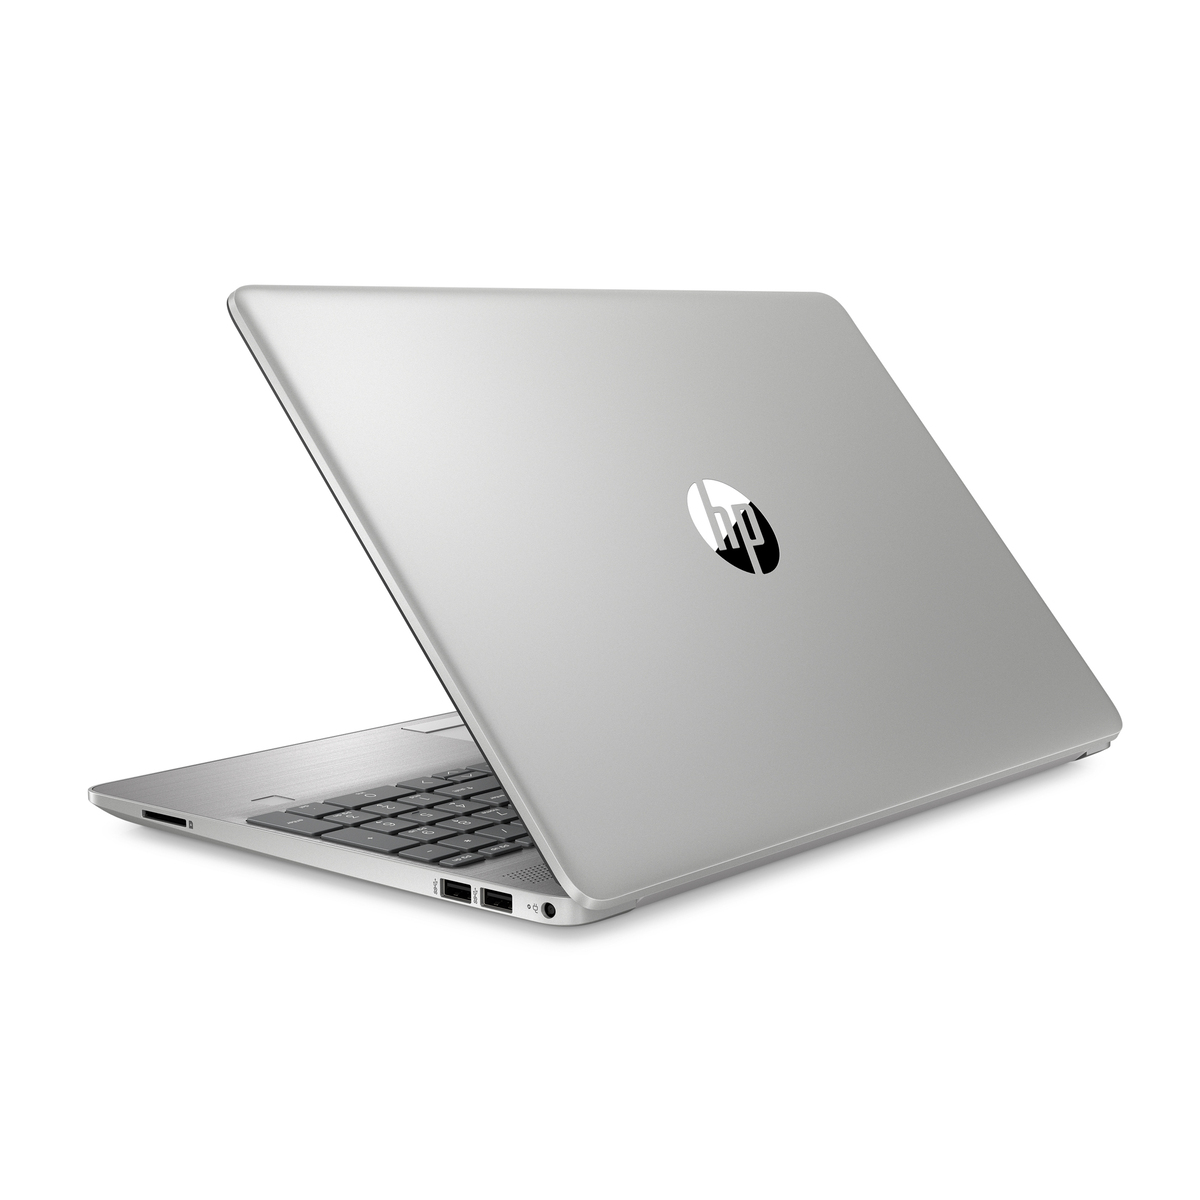 HP 250 G8 Notebook PC 15.6" HD,250-G8 (27K27EA) Intel® Core™ i3 processor,4GB RAM,1TB HDD,Intel® UHD Graphics,Windows 10,Silver